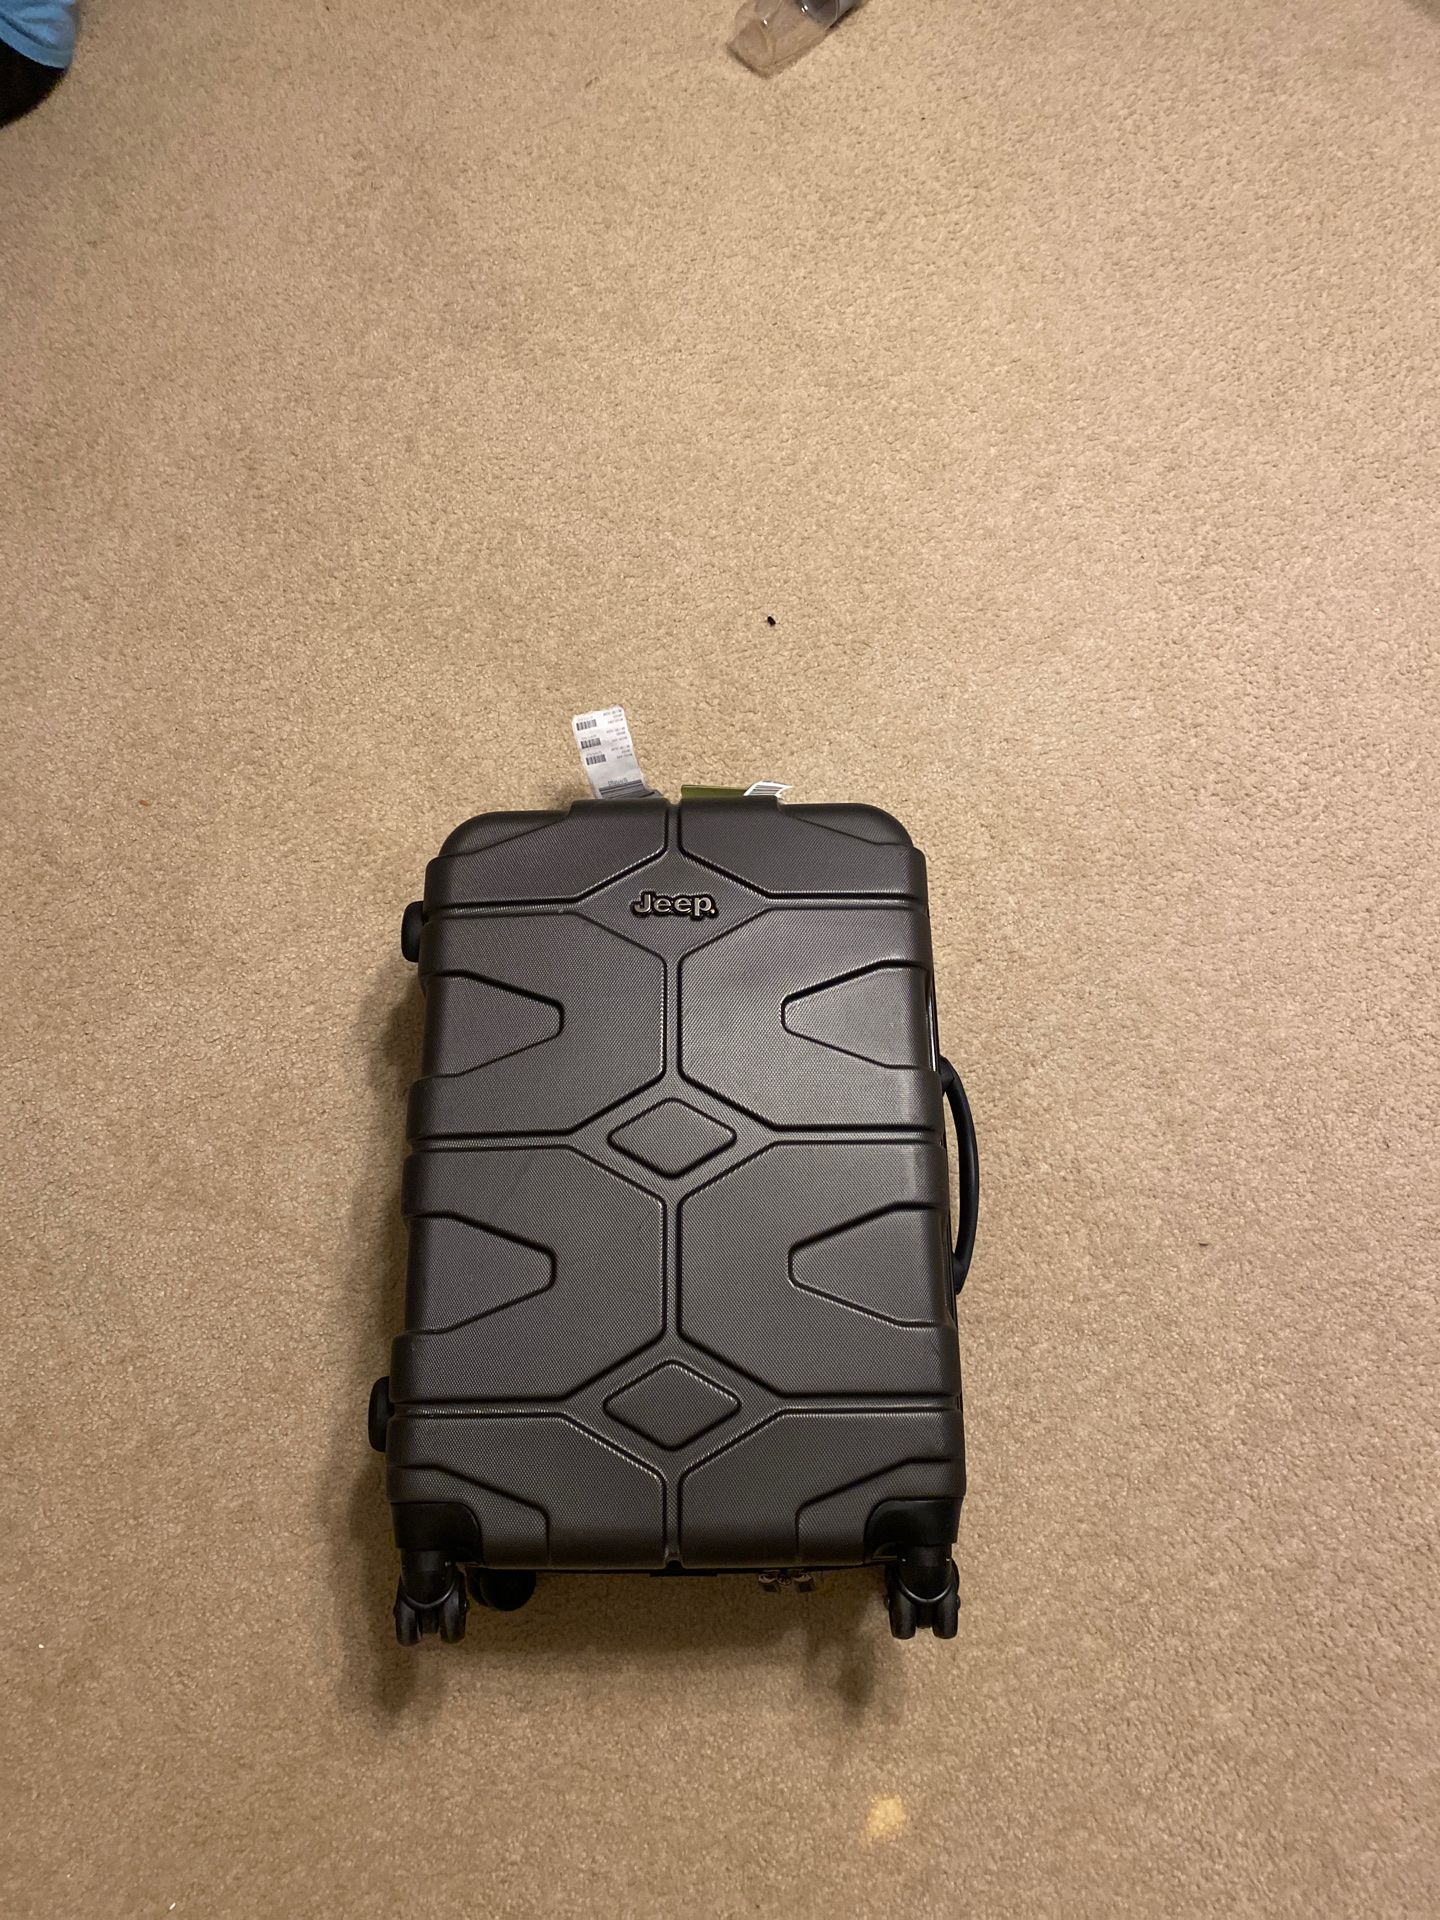 Jeep suitcase